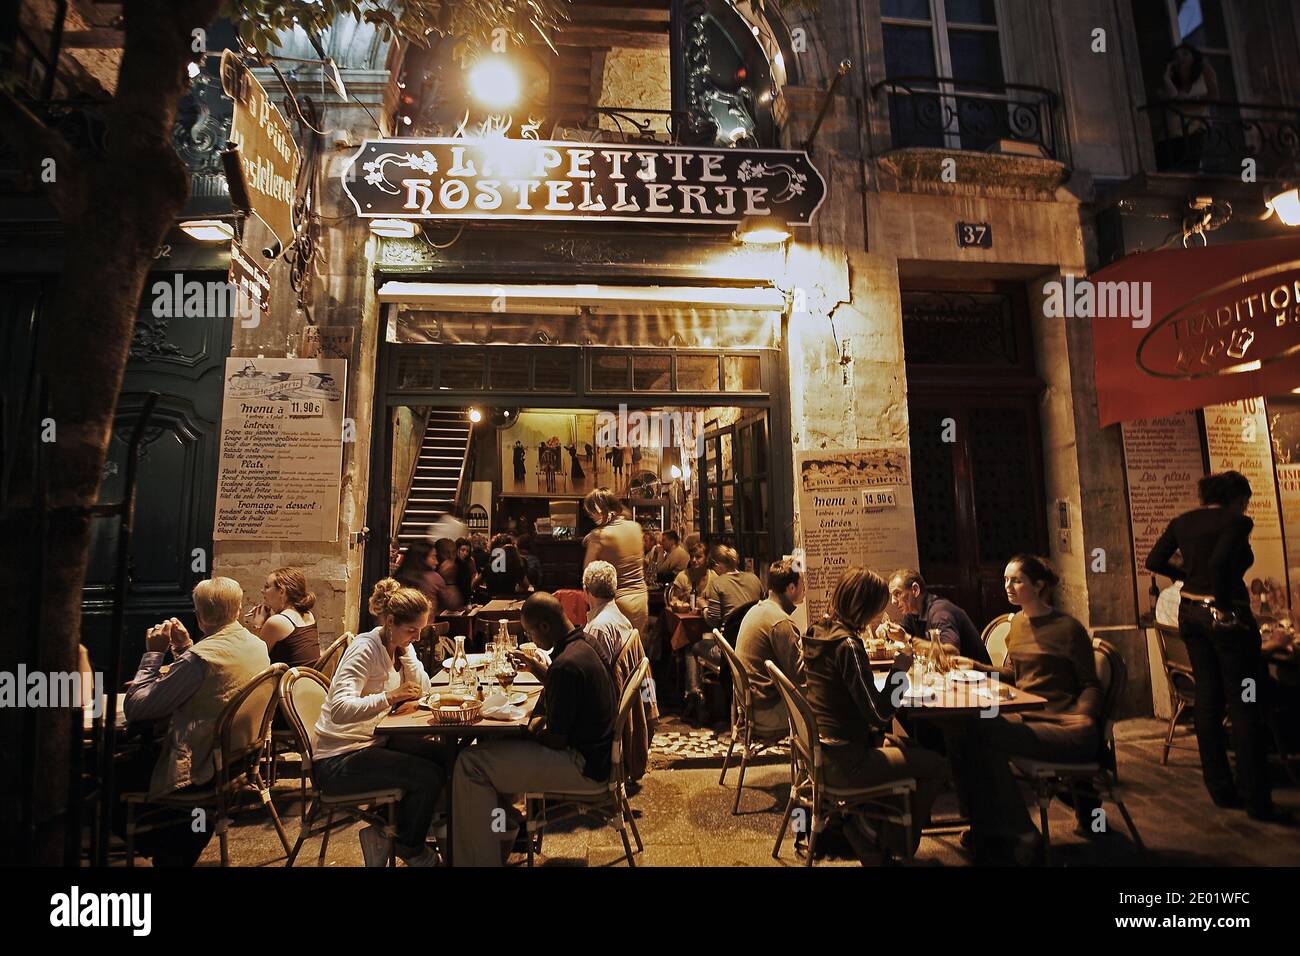 FRANCE / IIe-de-France/Paris/ Restaurant La Petite Hostellerie in Latin Quarter at night . Stock Photo